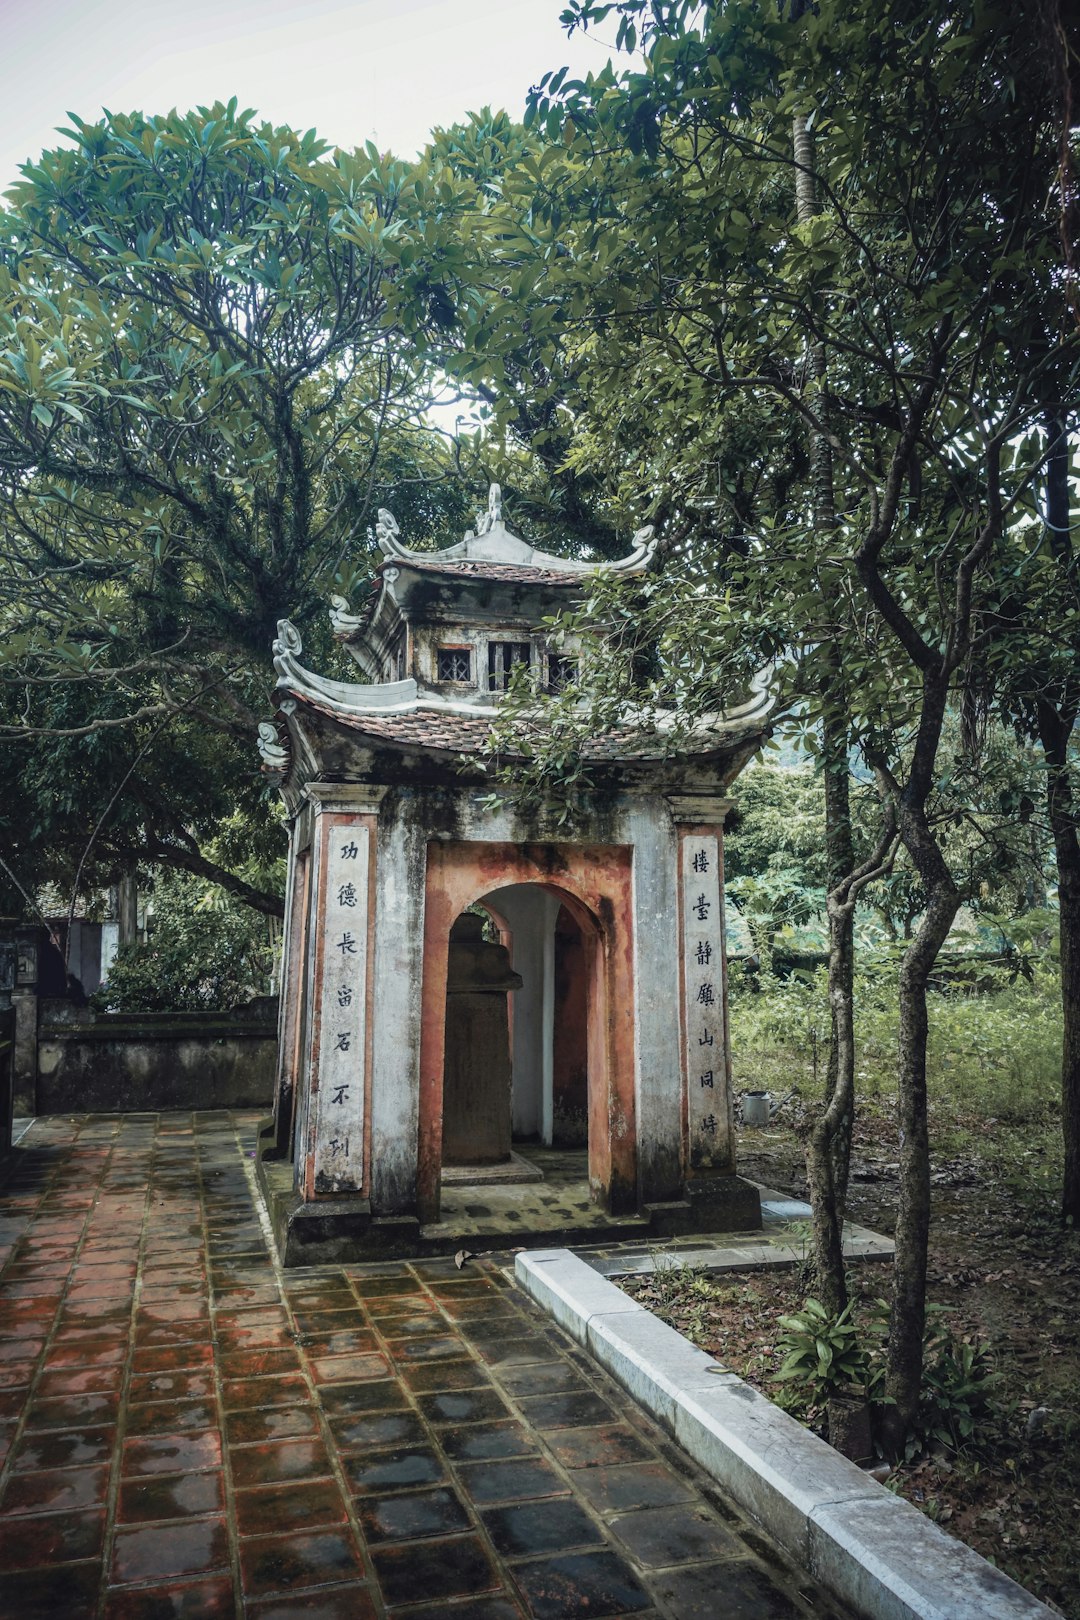 Historic site photo spot Hoa Lu ancient capital Vietnam